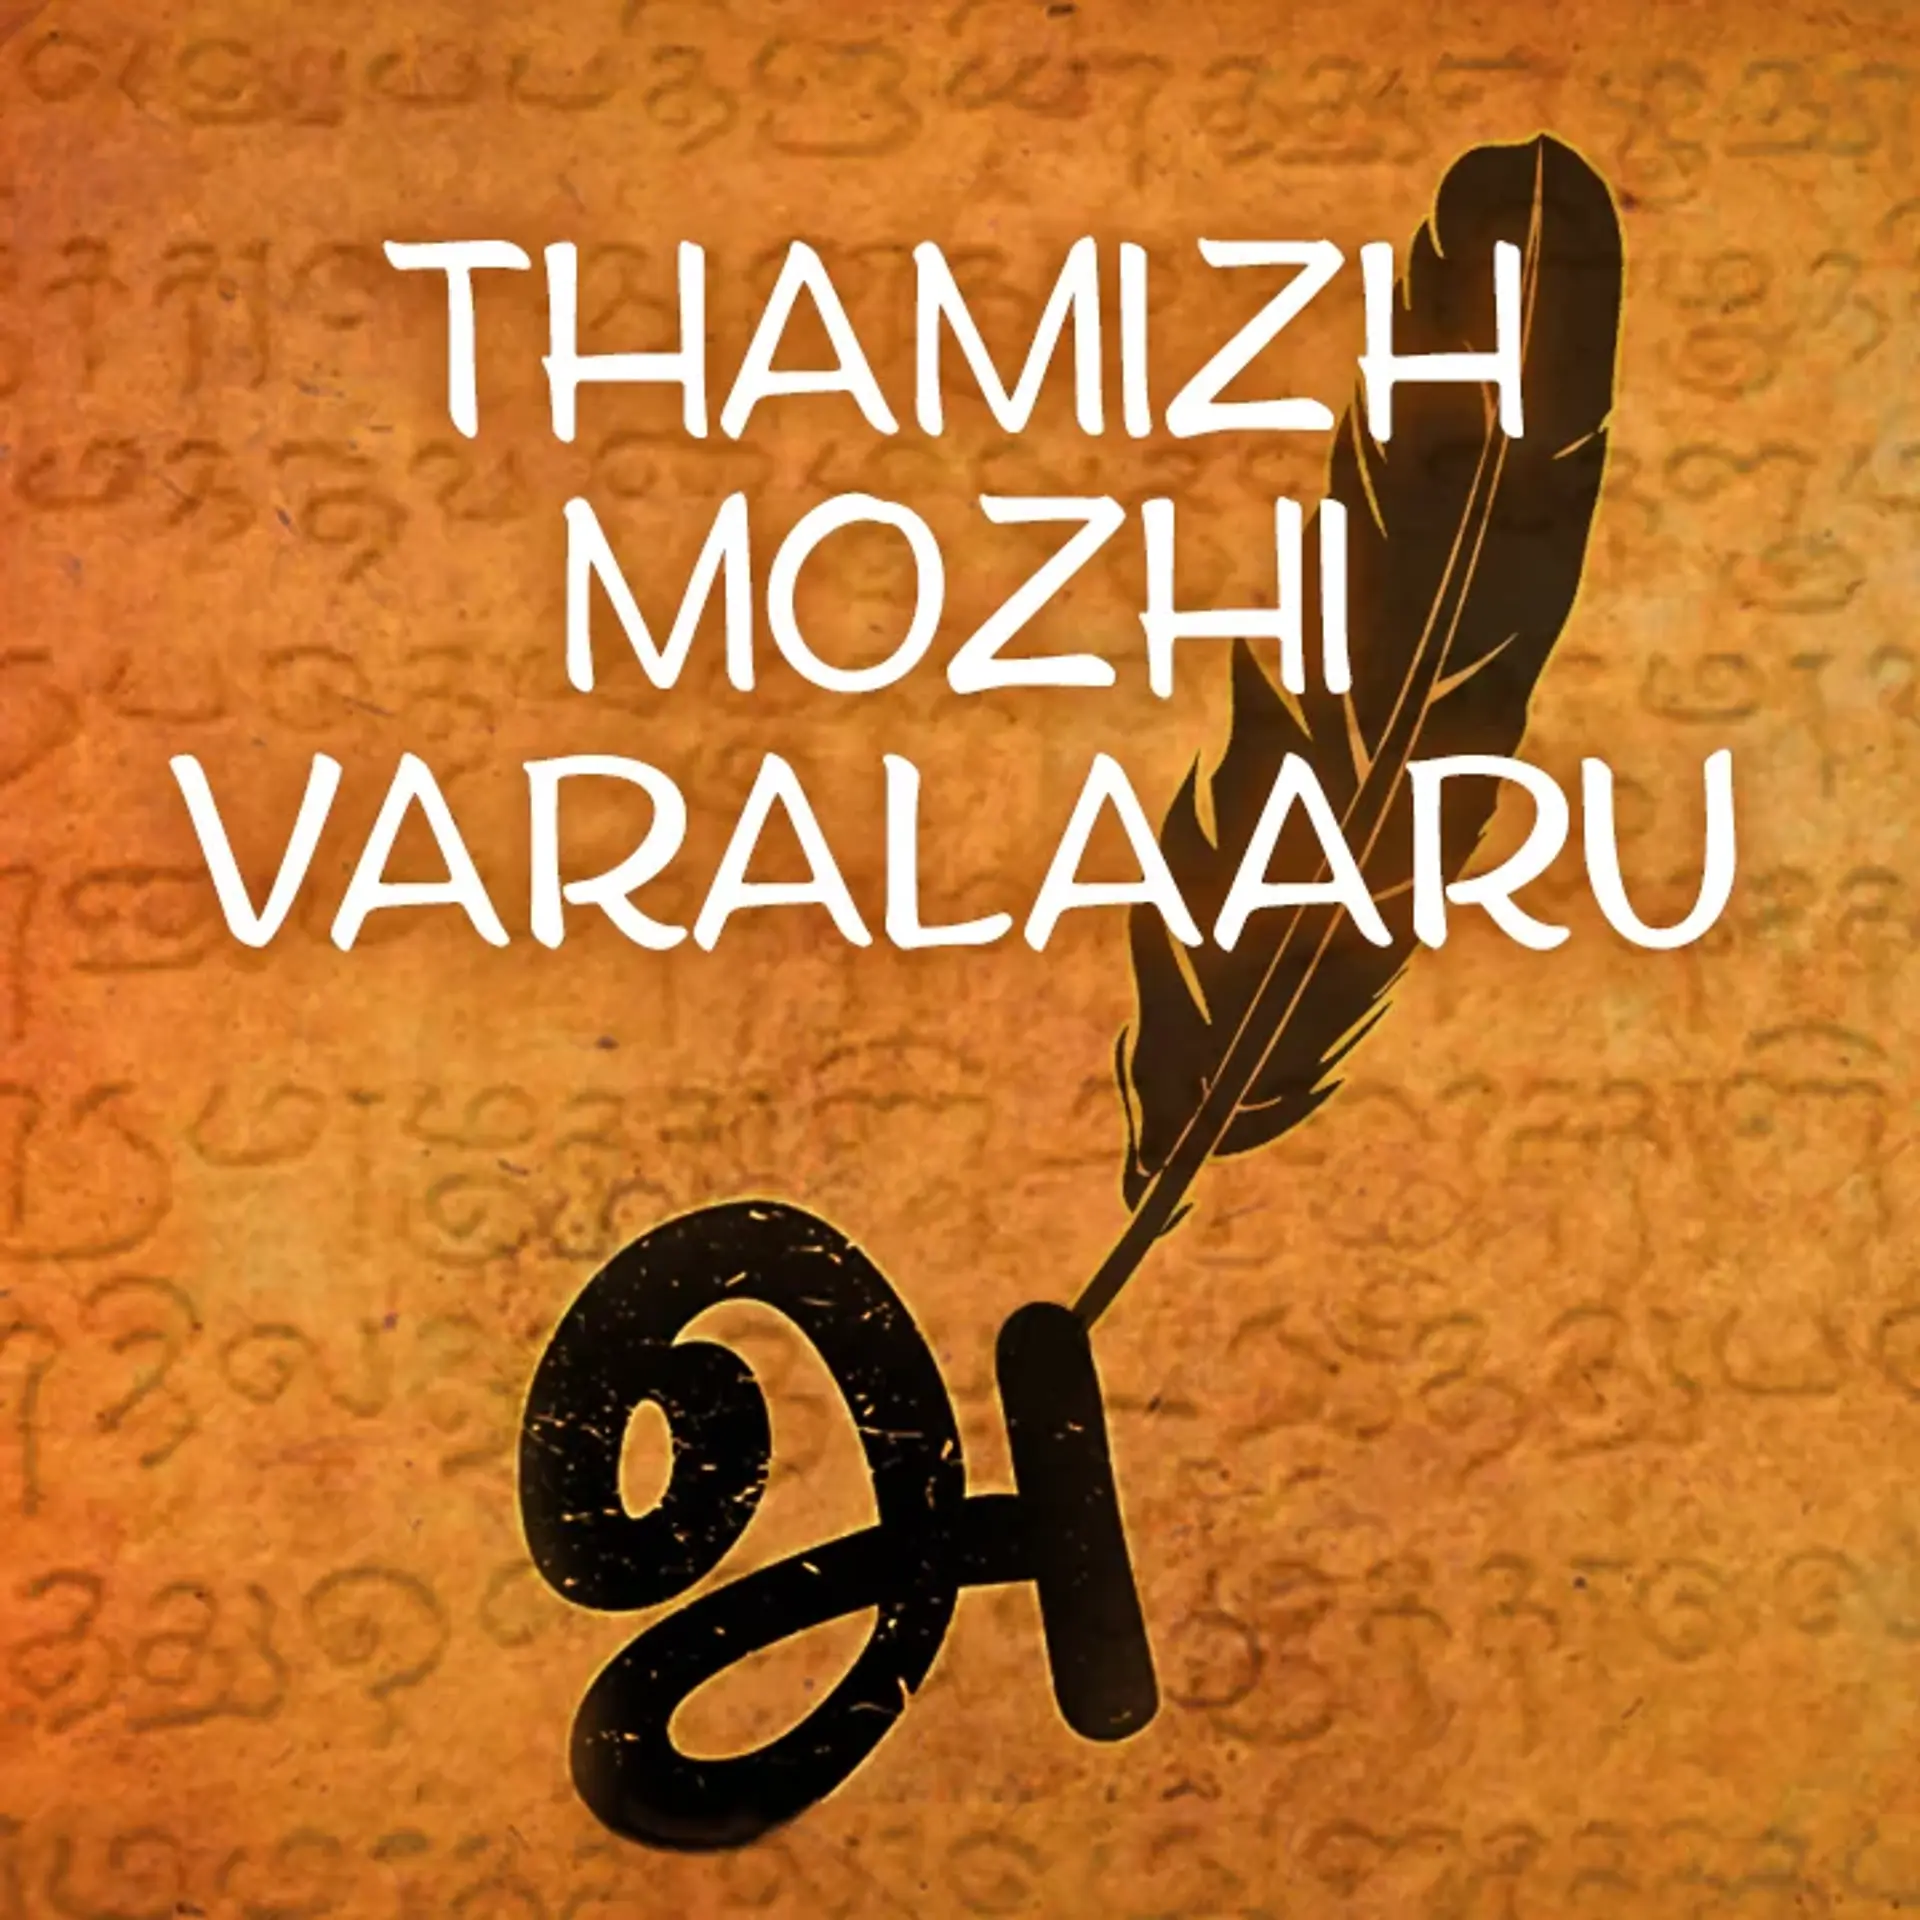 5. Then Dravida Mozhigalum Tamizhum